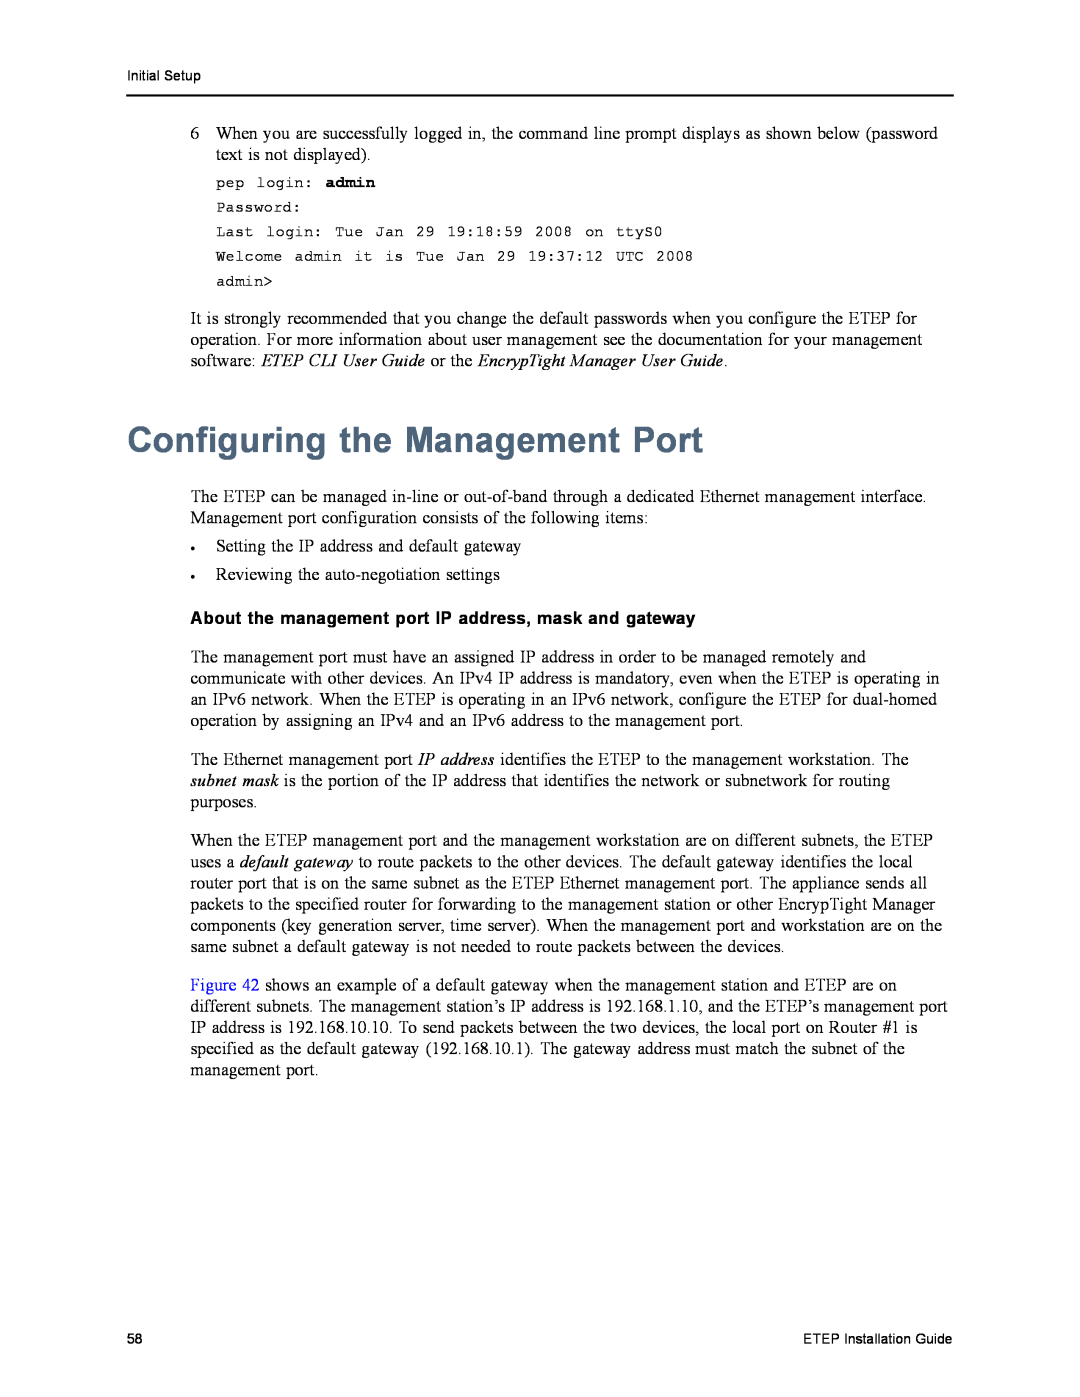 Black Box ET10000A, ET1000A manual Configuring the Management Port, About the management port IP address, mask and gateway 